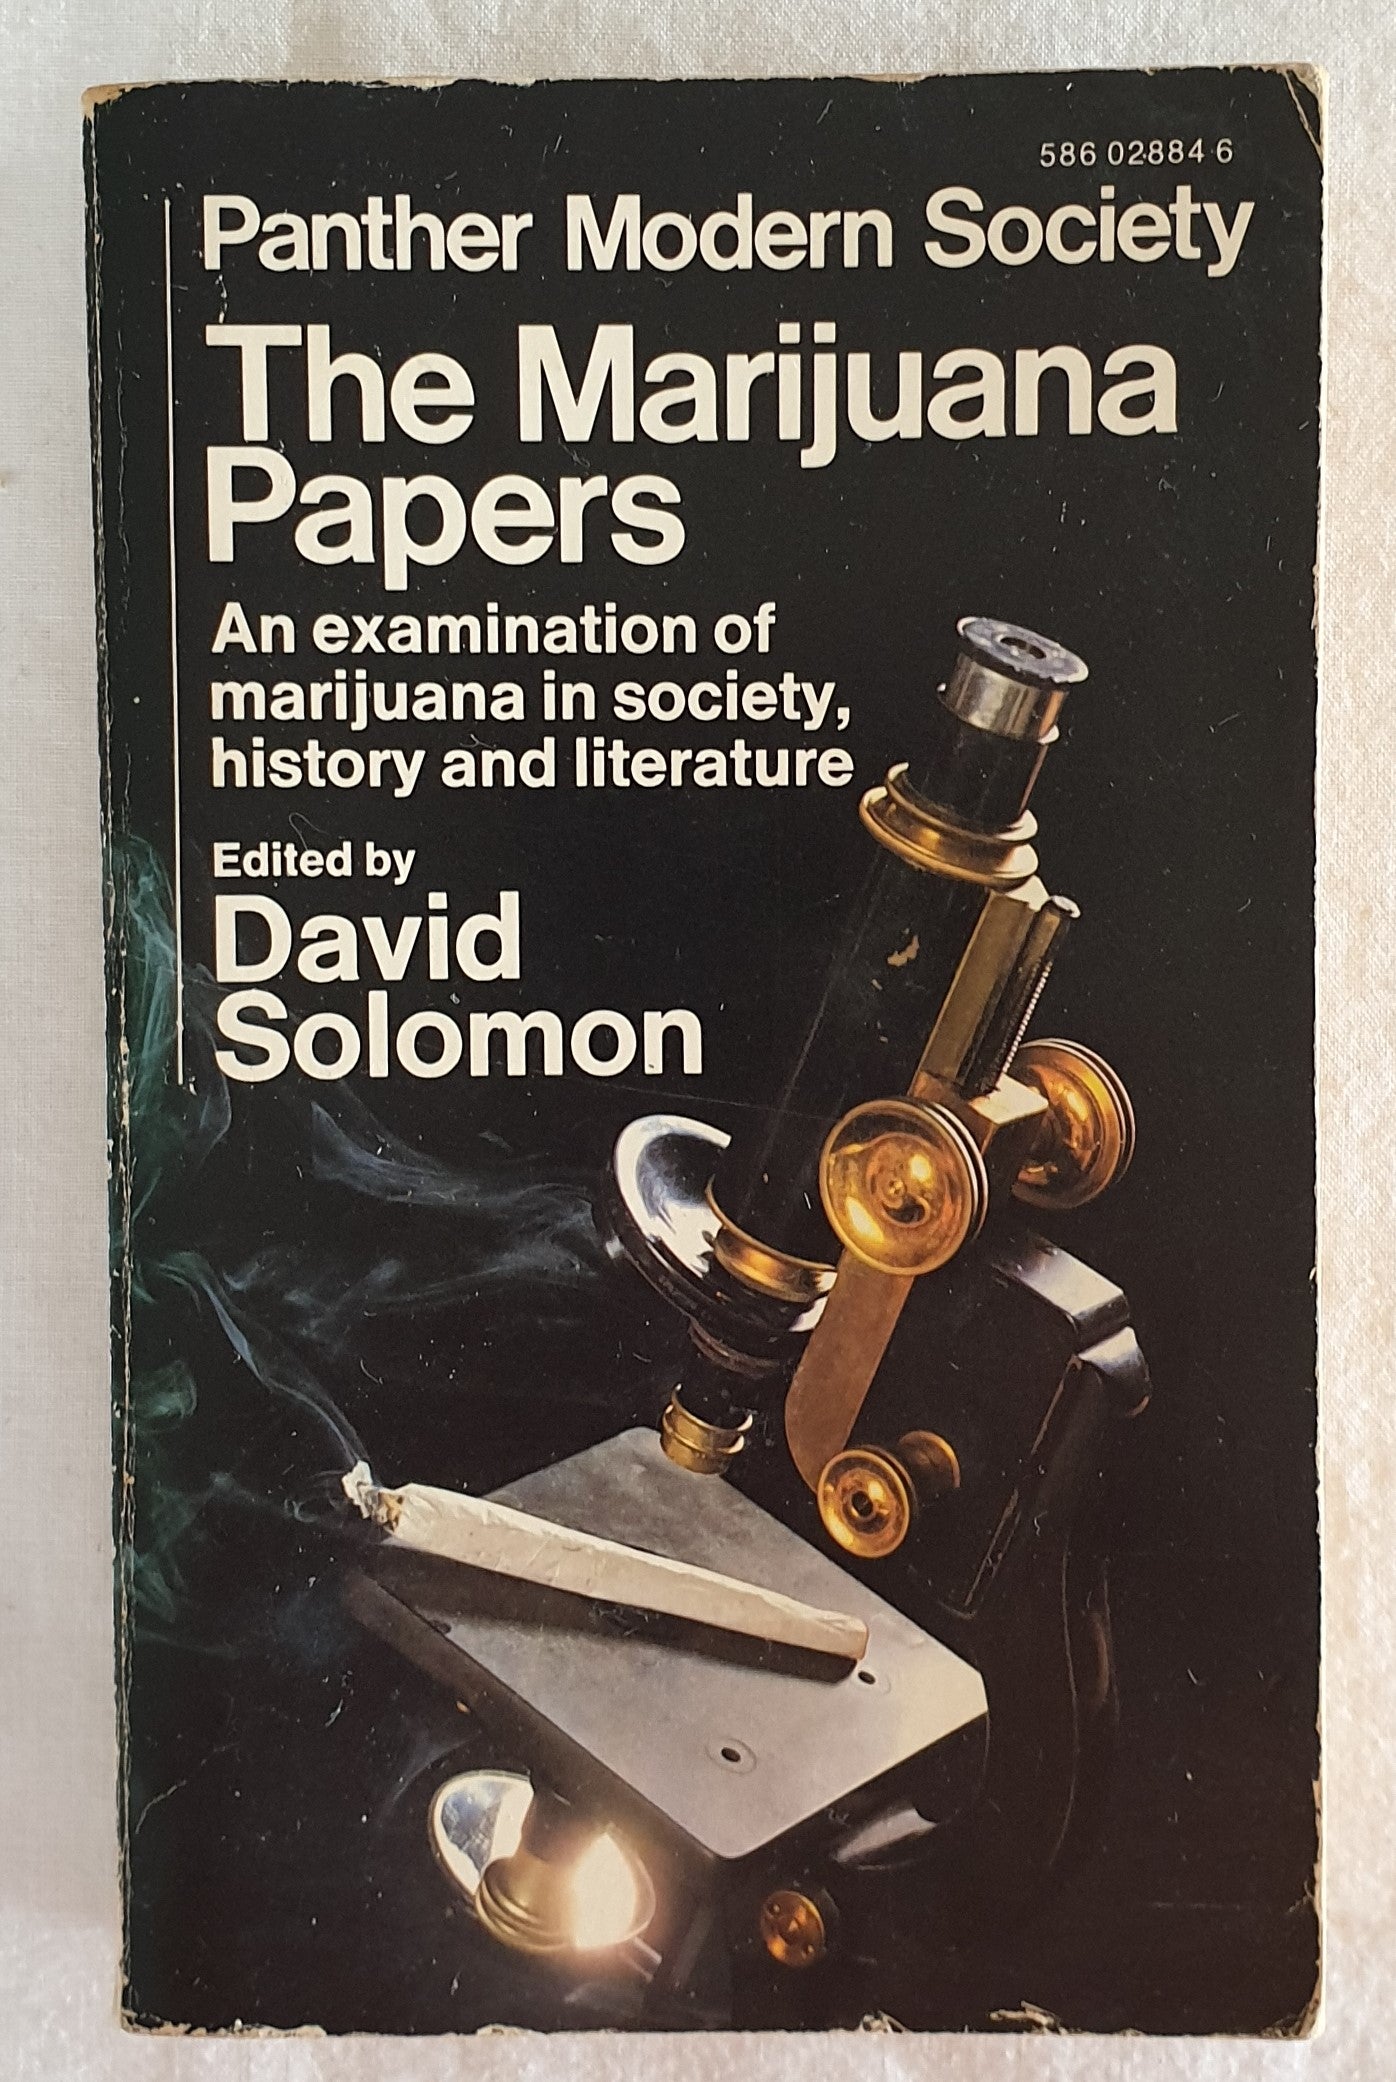 The Marijuana Papers by David Solomon